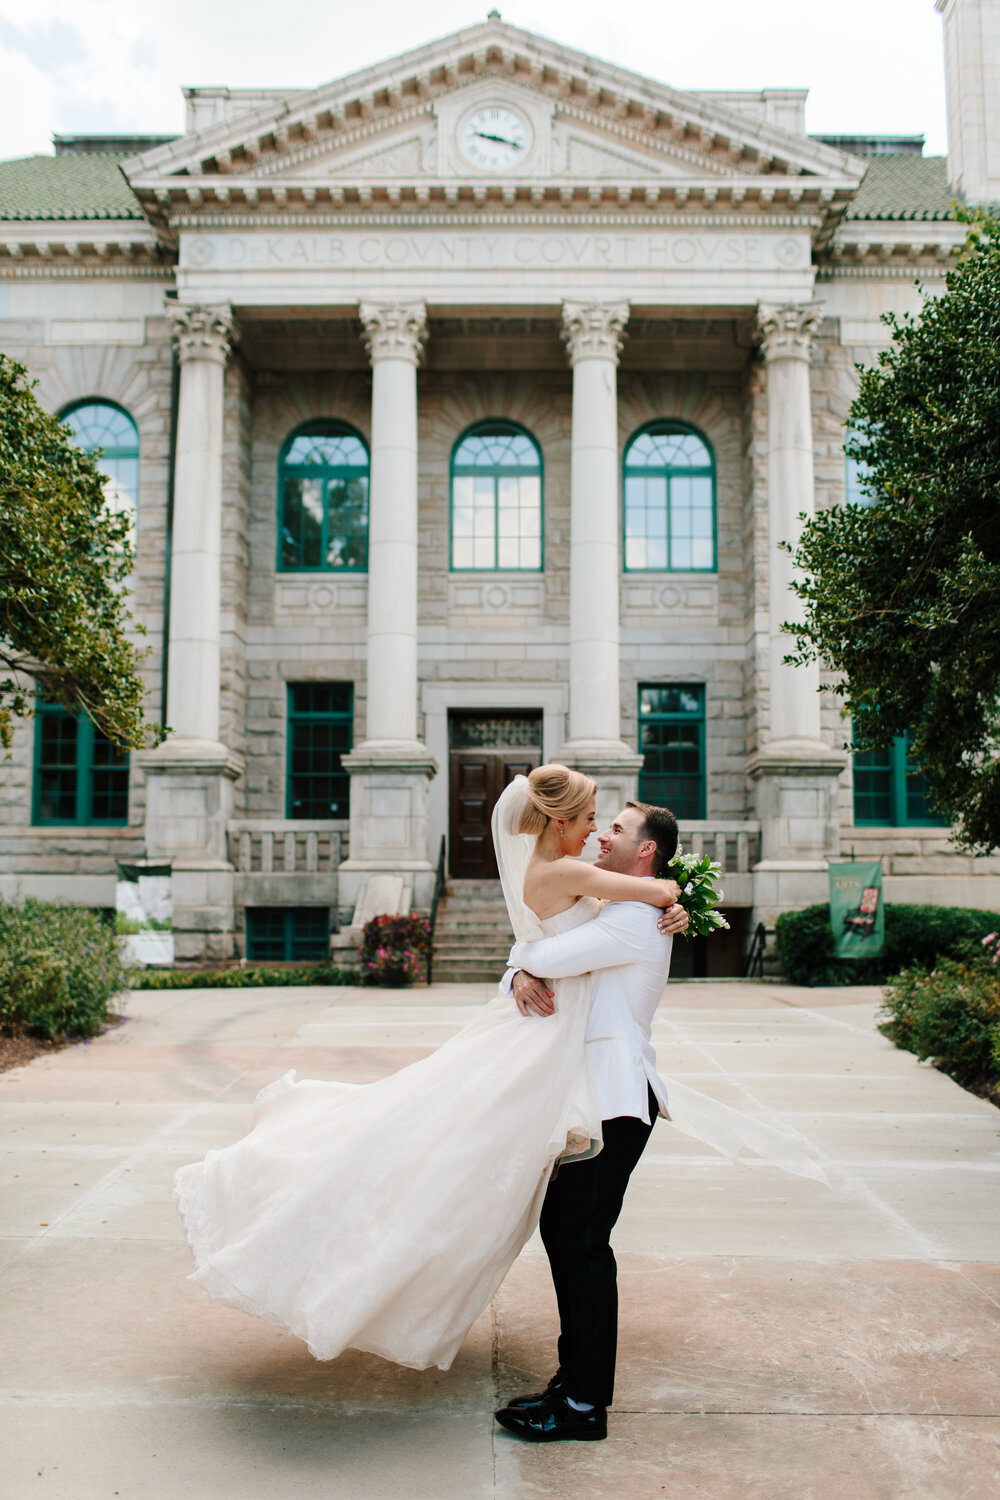 Photo Credit: Ben &amp; Colleen, Wedding Photographers.